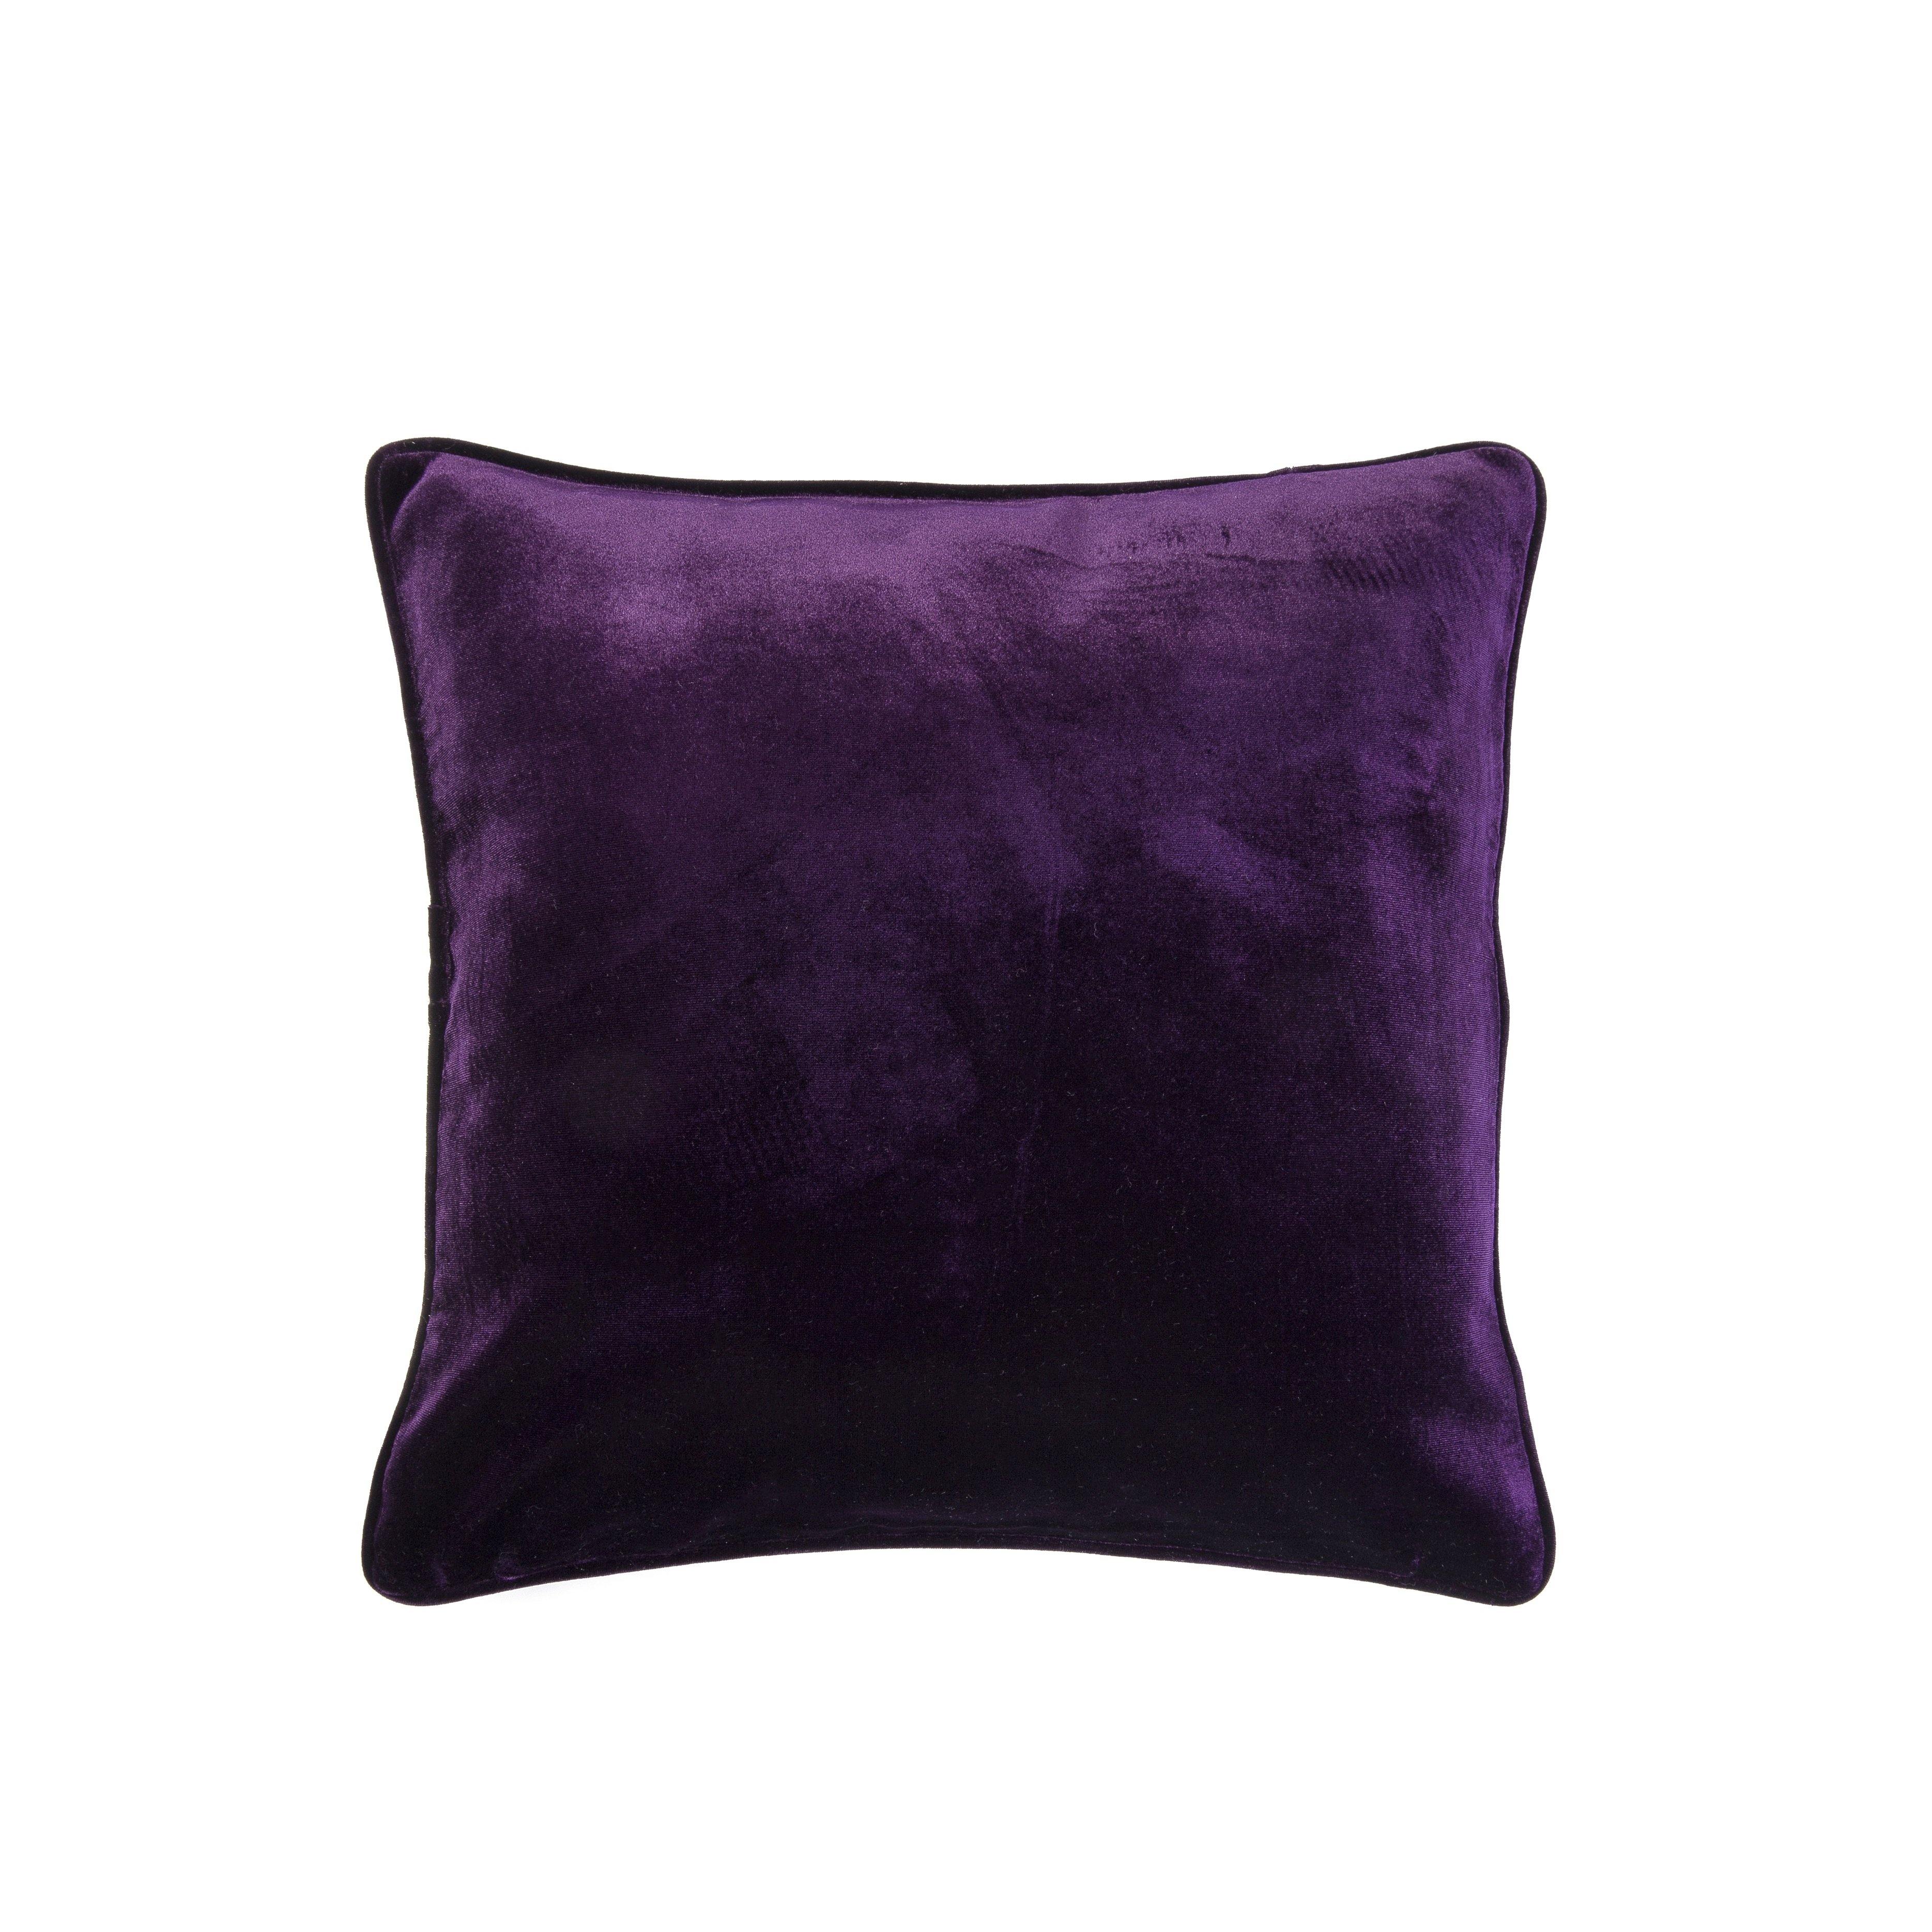 Velvet Pillow with Piping - Purple - bohemtolia